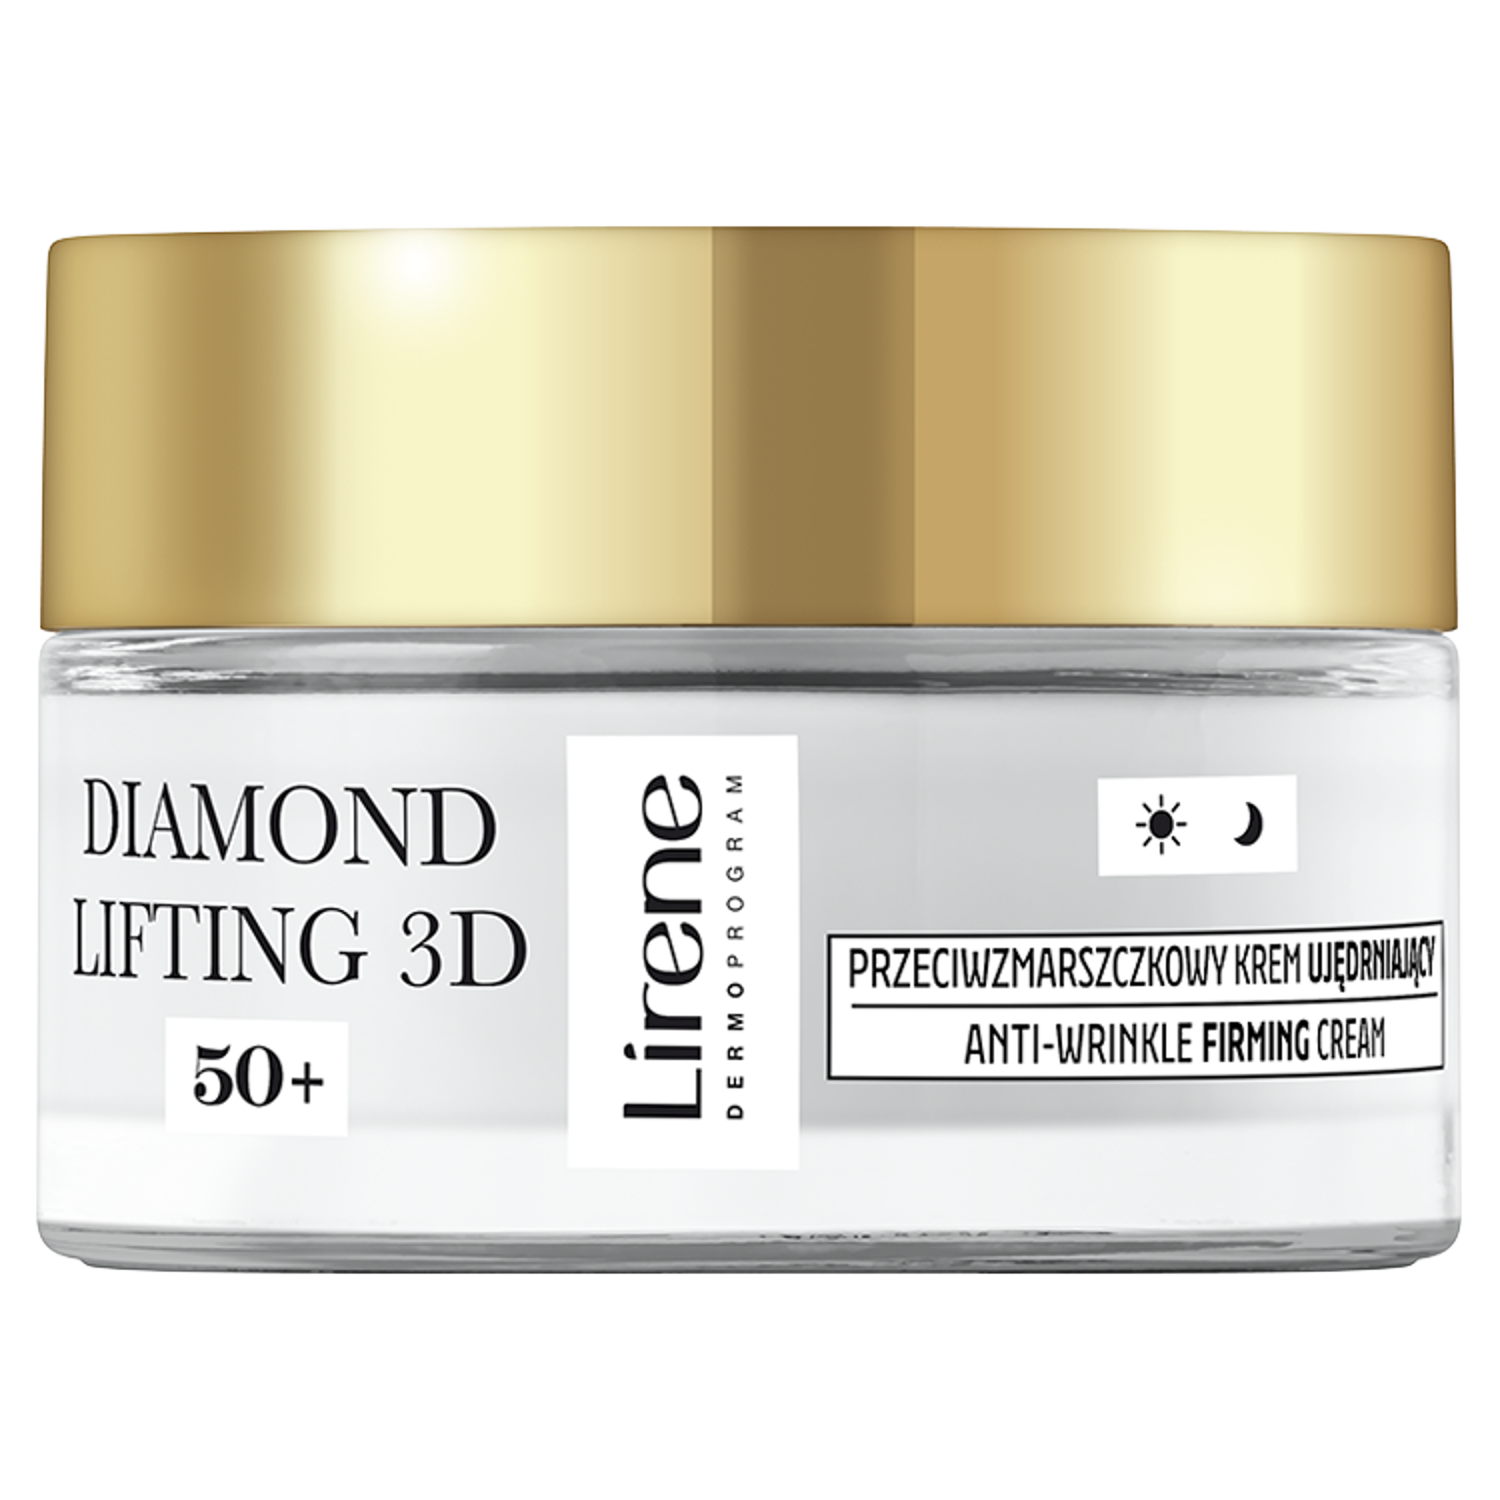 цена Укрепляющий крем для лица от морщин 50+ для дня и ночи Lirene Diamond Lifting 3D, 50 мл